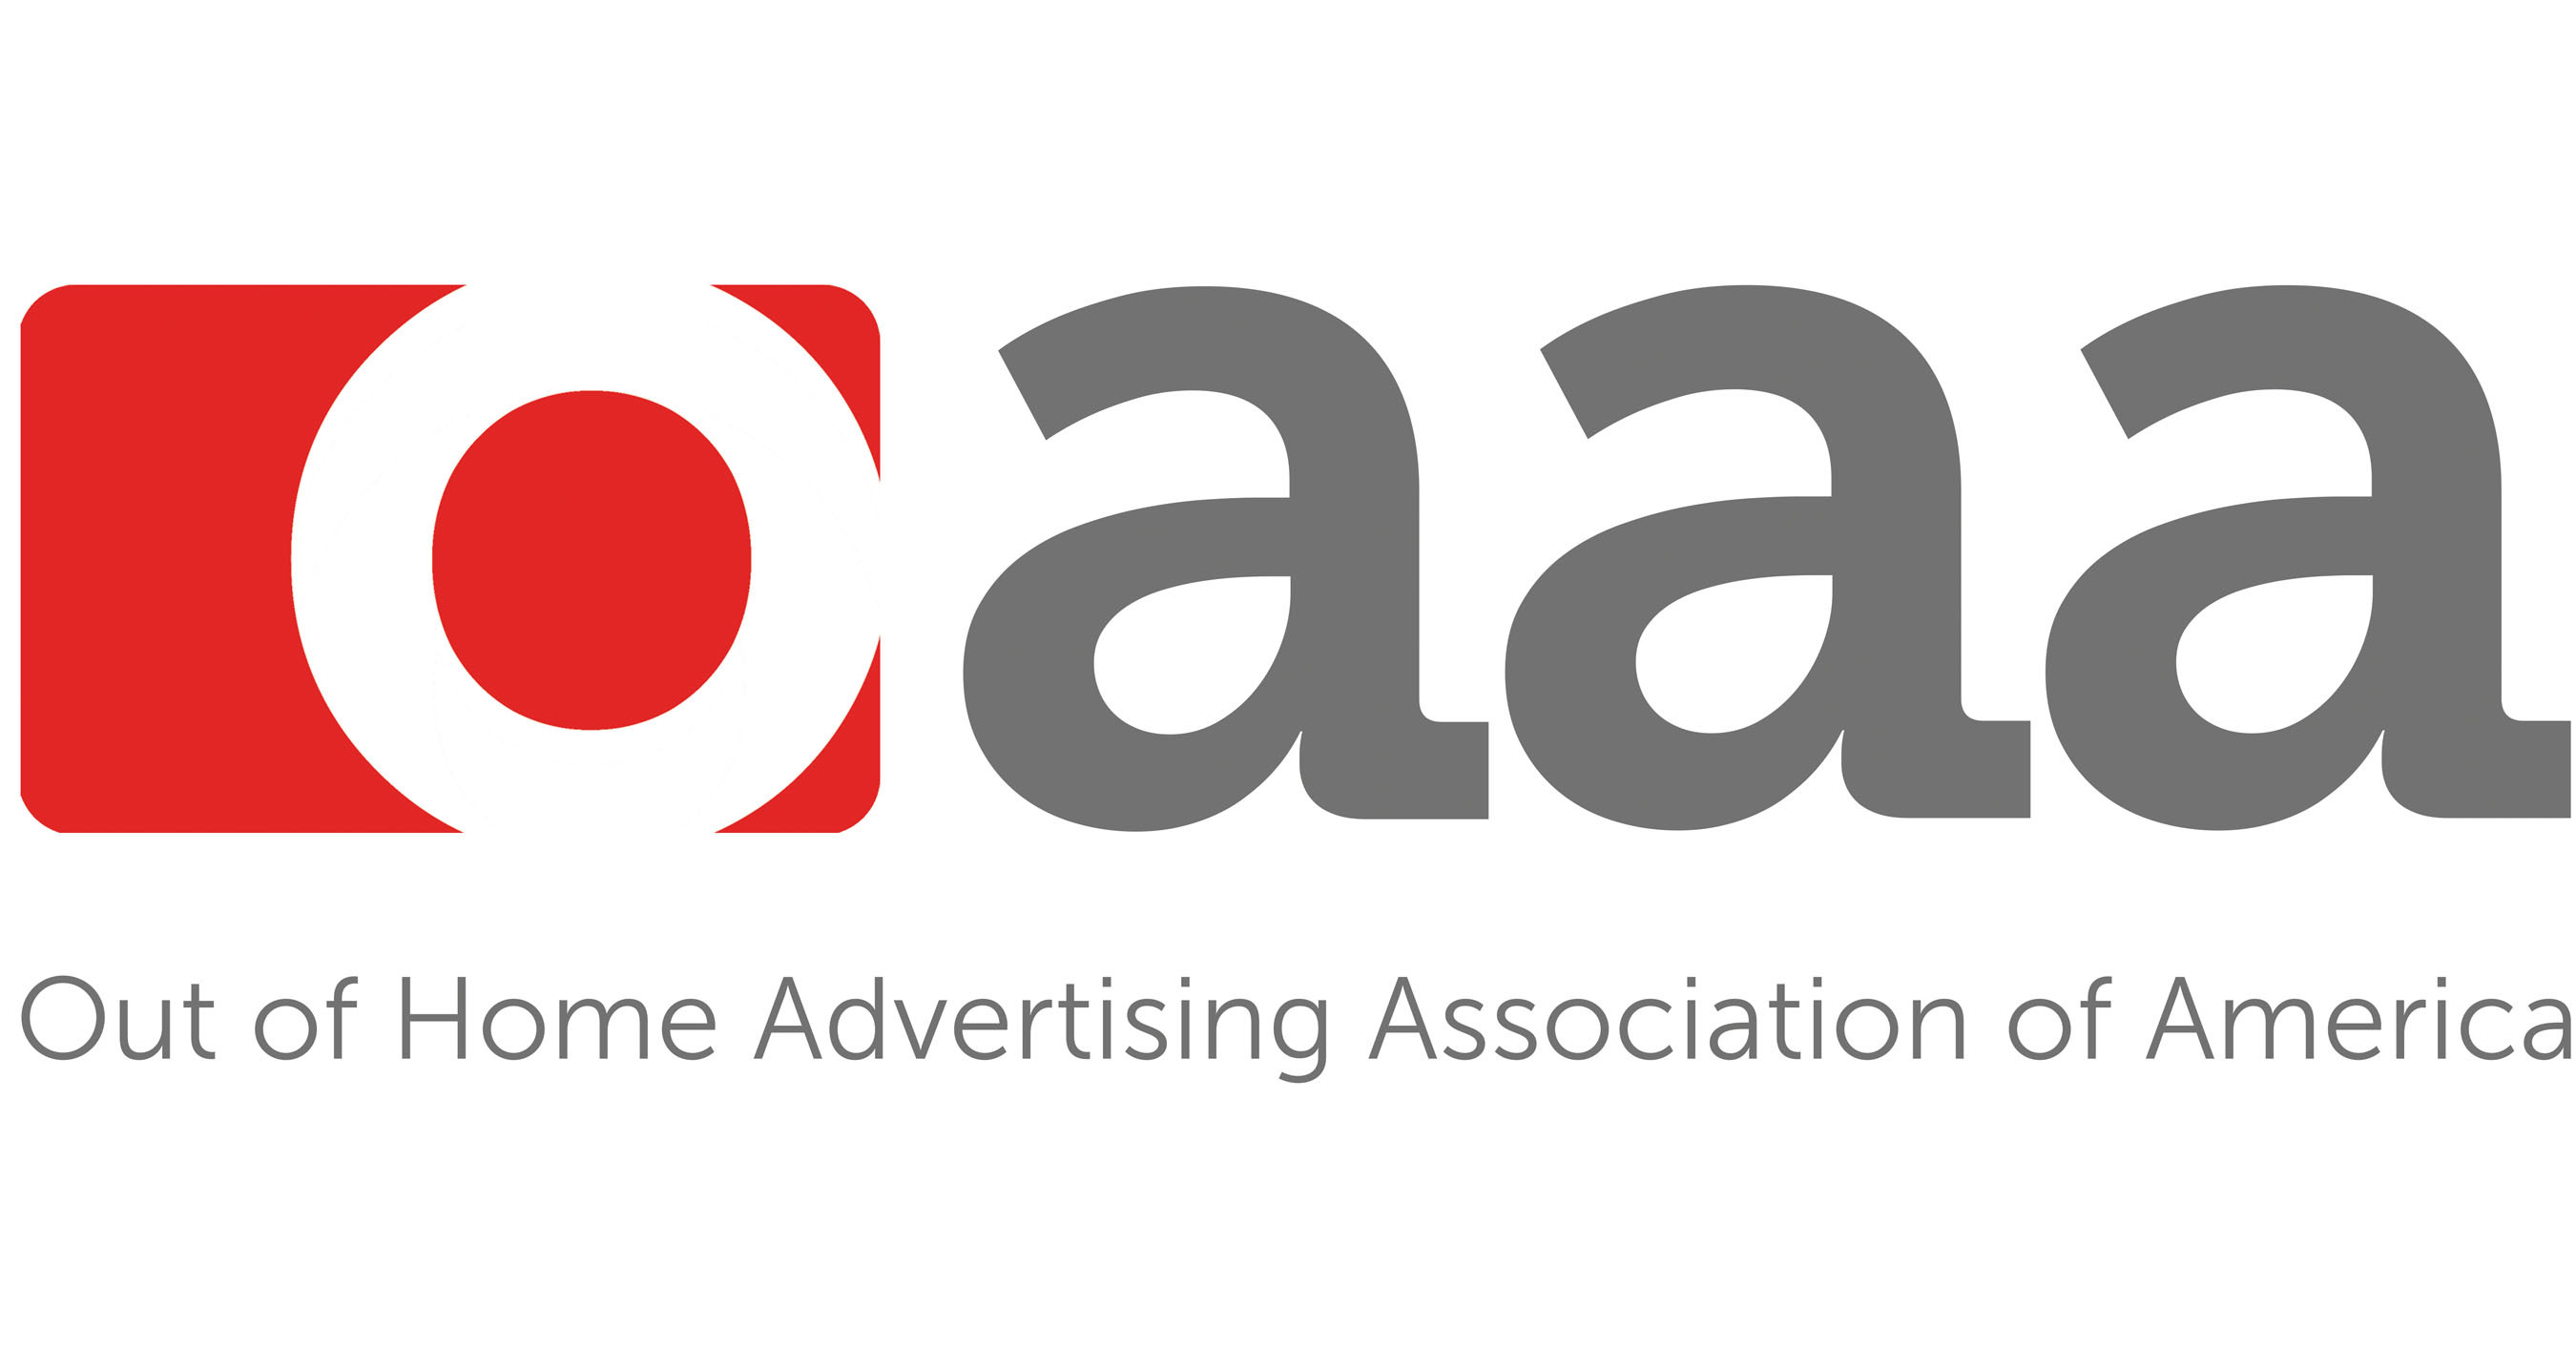 OAAA Names Outdoor Media Group Executive Christina Radigan As Chief Marketing Officer